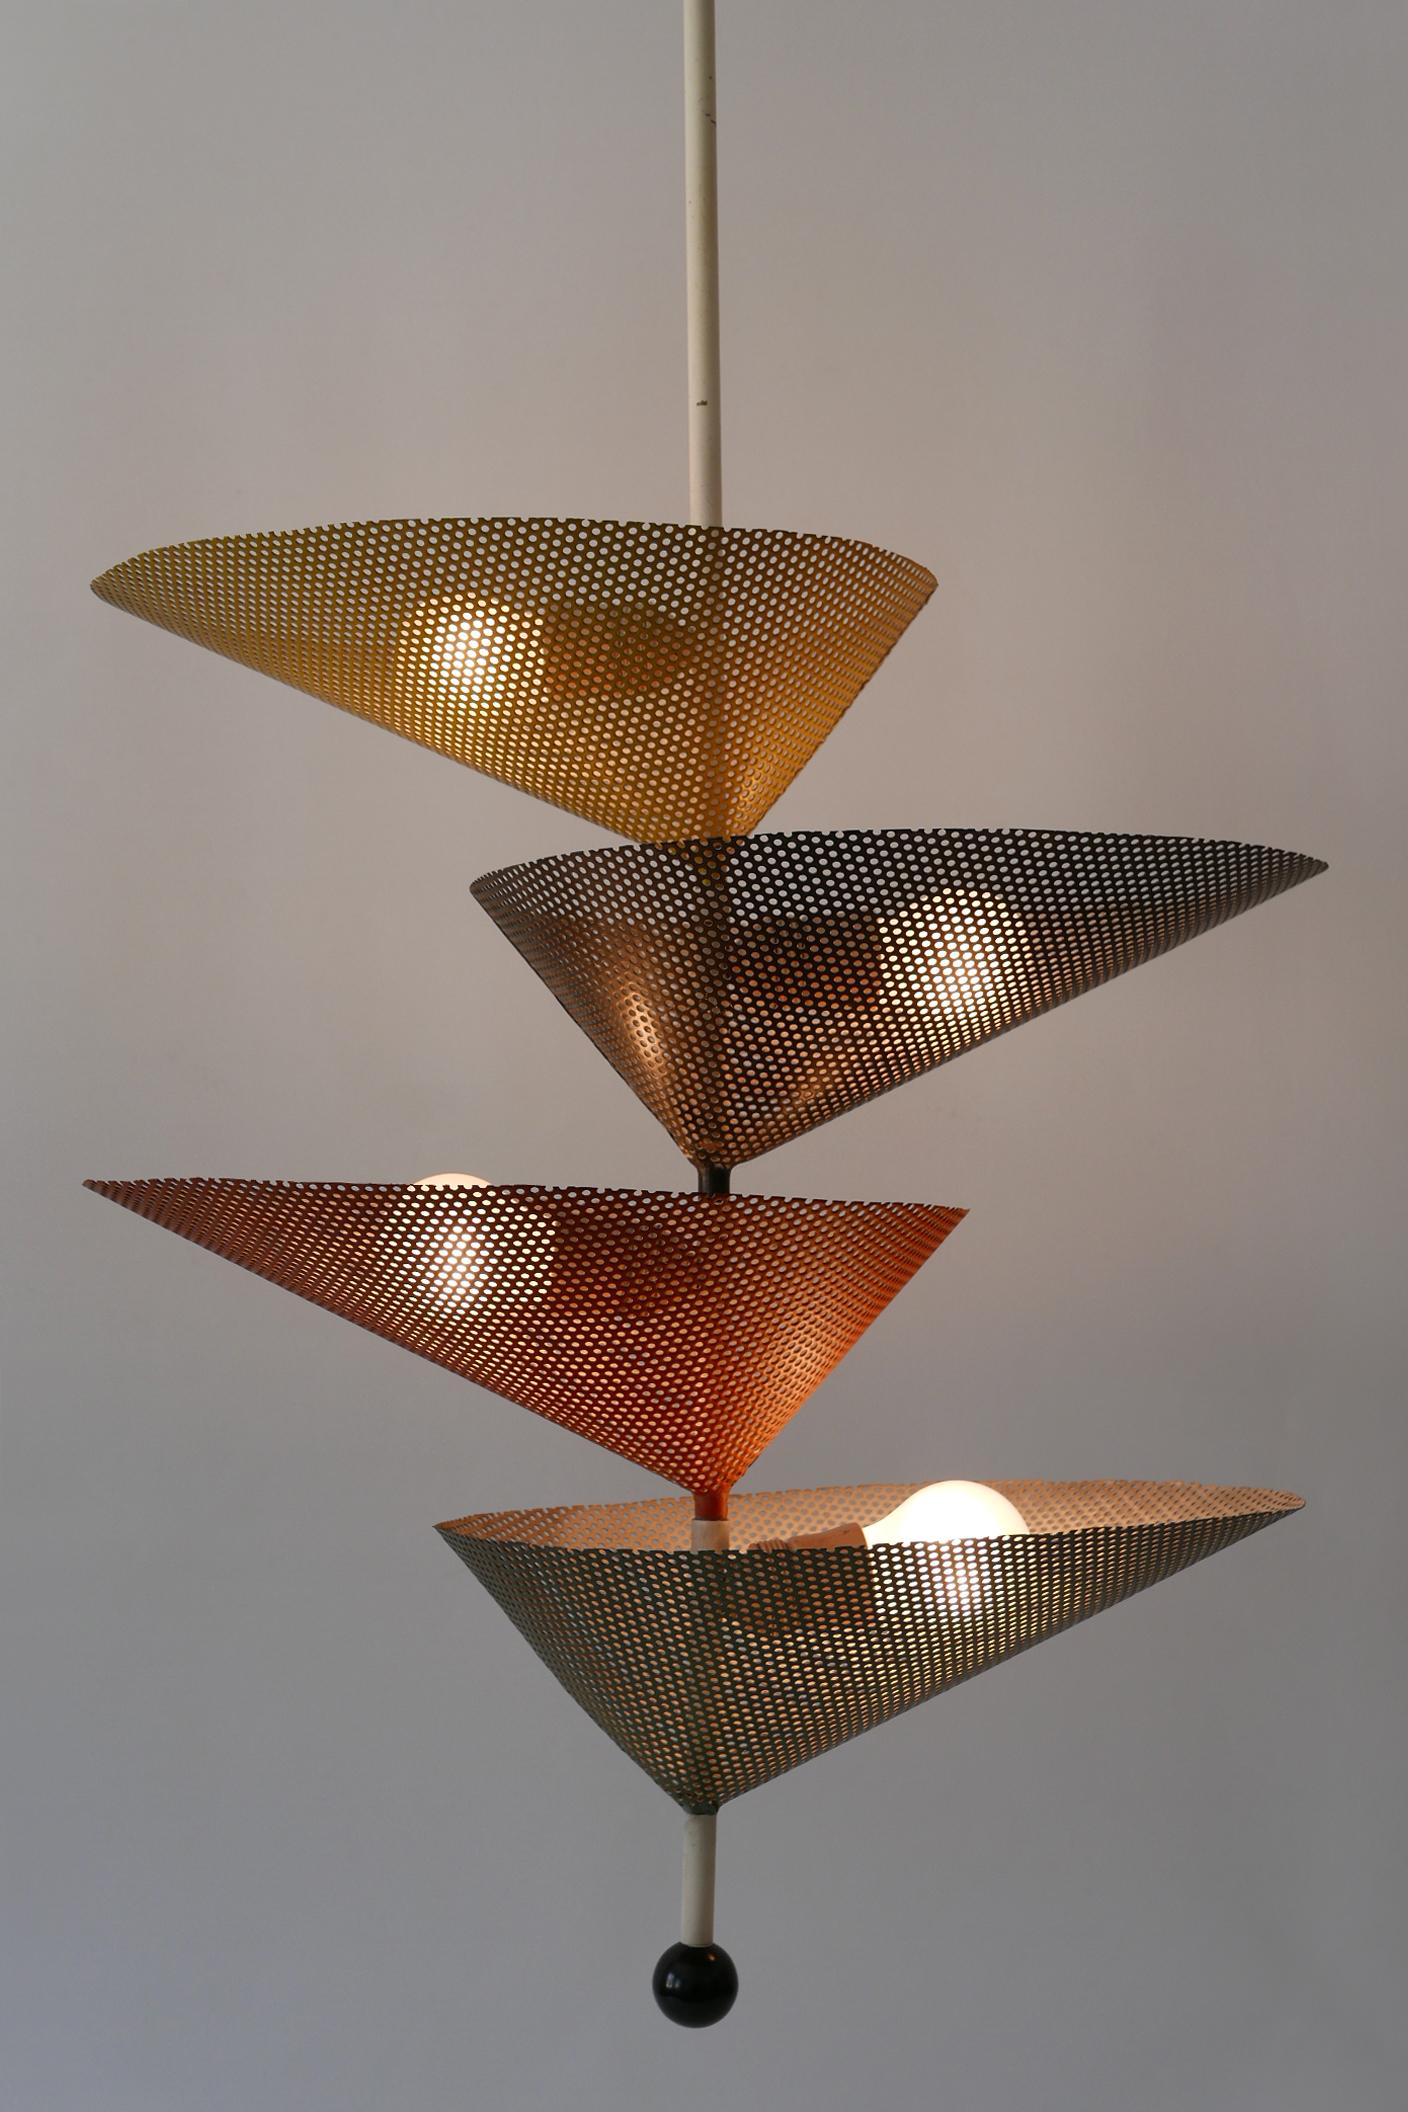 Rare Mid-Century Modern Chandelier or Pendant Lamp by Mathieu Matégot 1950s For Sale 9